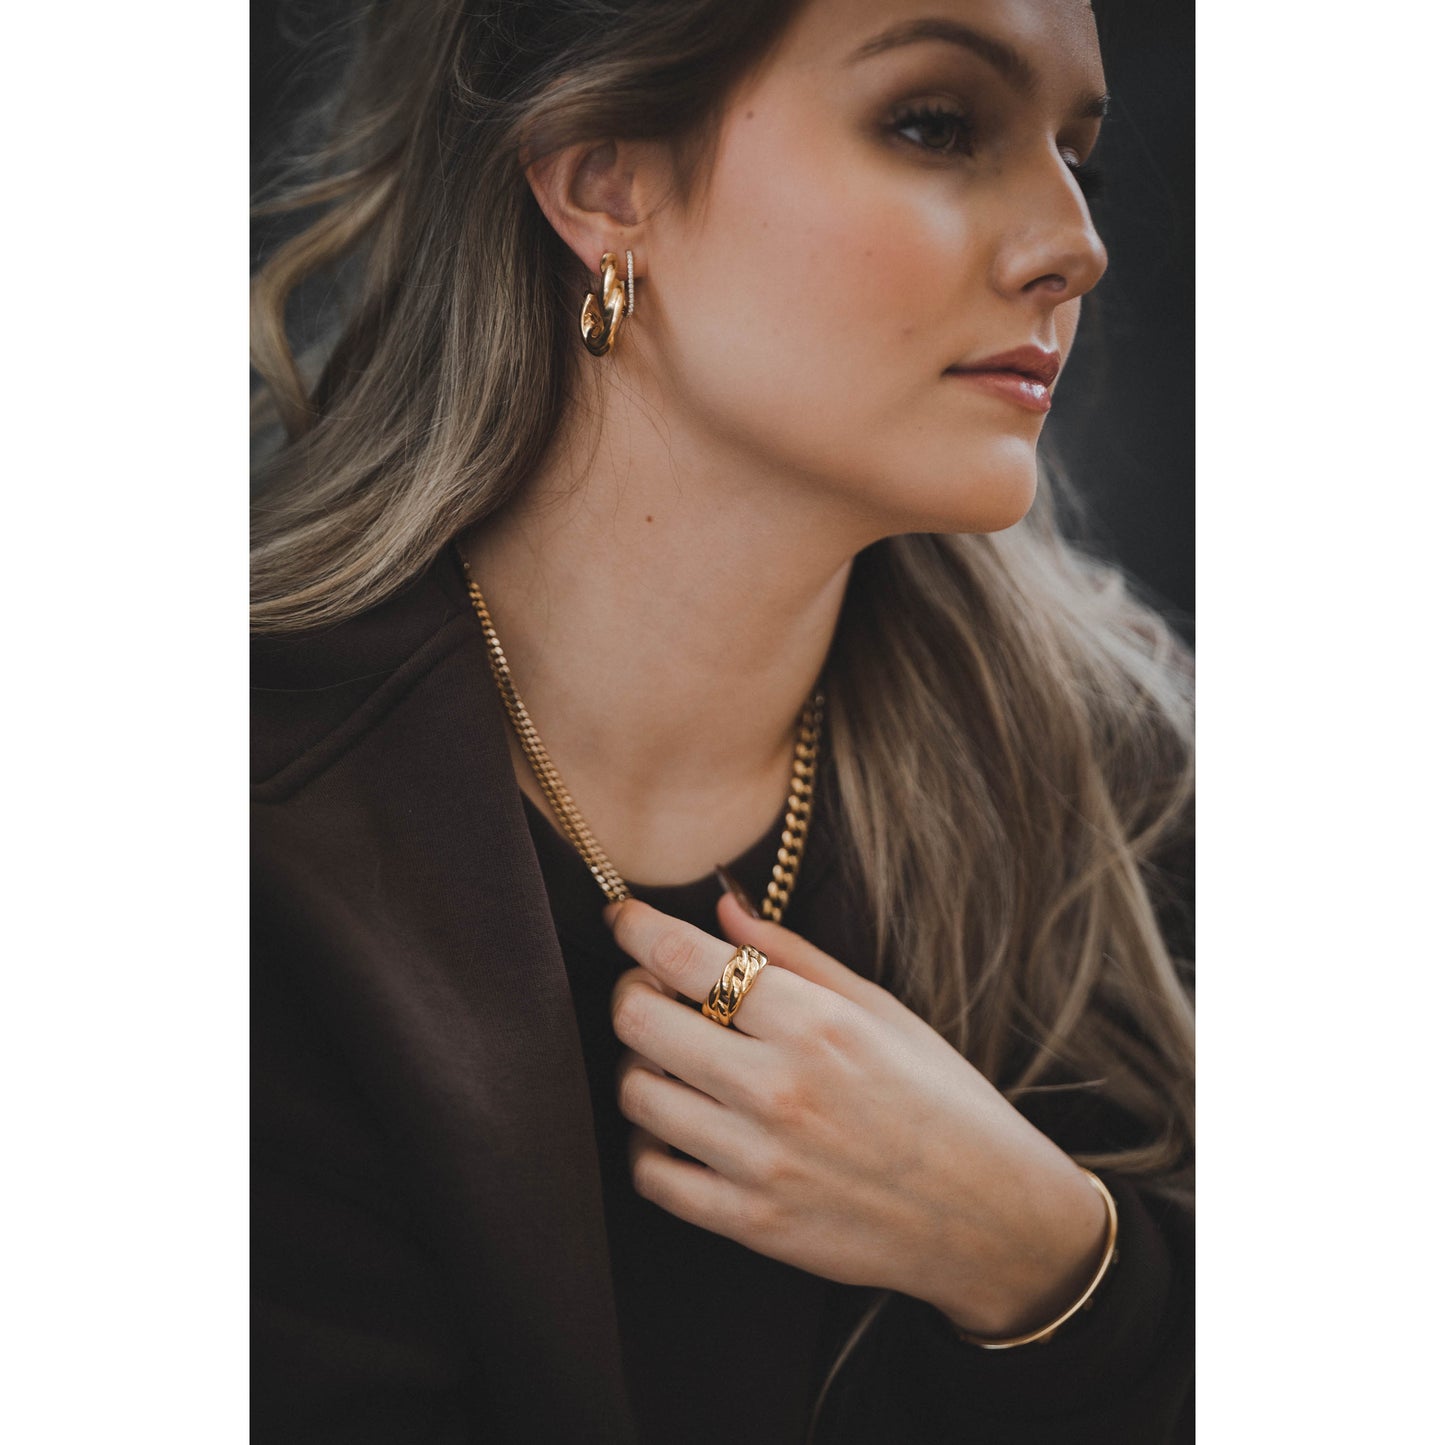 KYA Ohrringe Yasemen Store Schmuck Accessoires Edelstahl Stainless Steel 14K Vergoldet Gold jewel jewelry earring